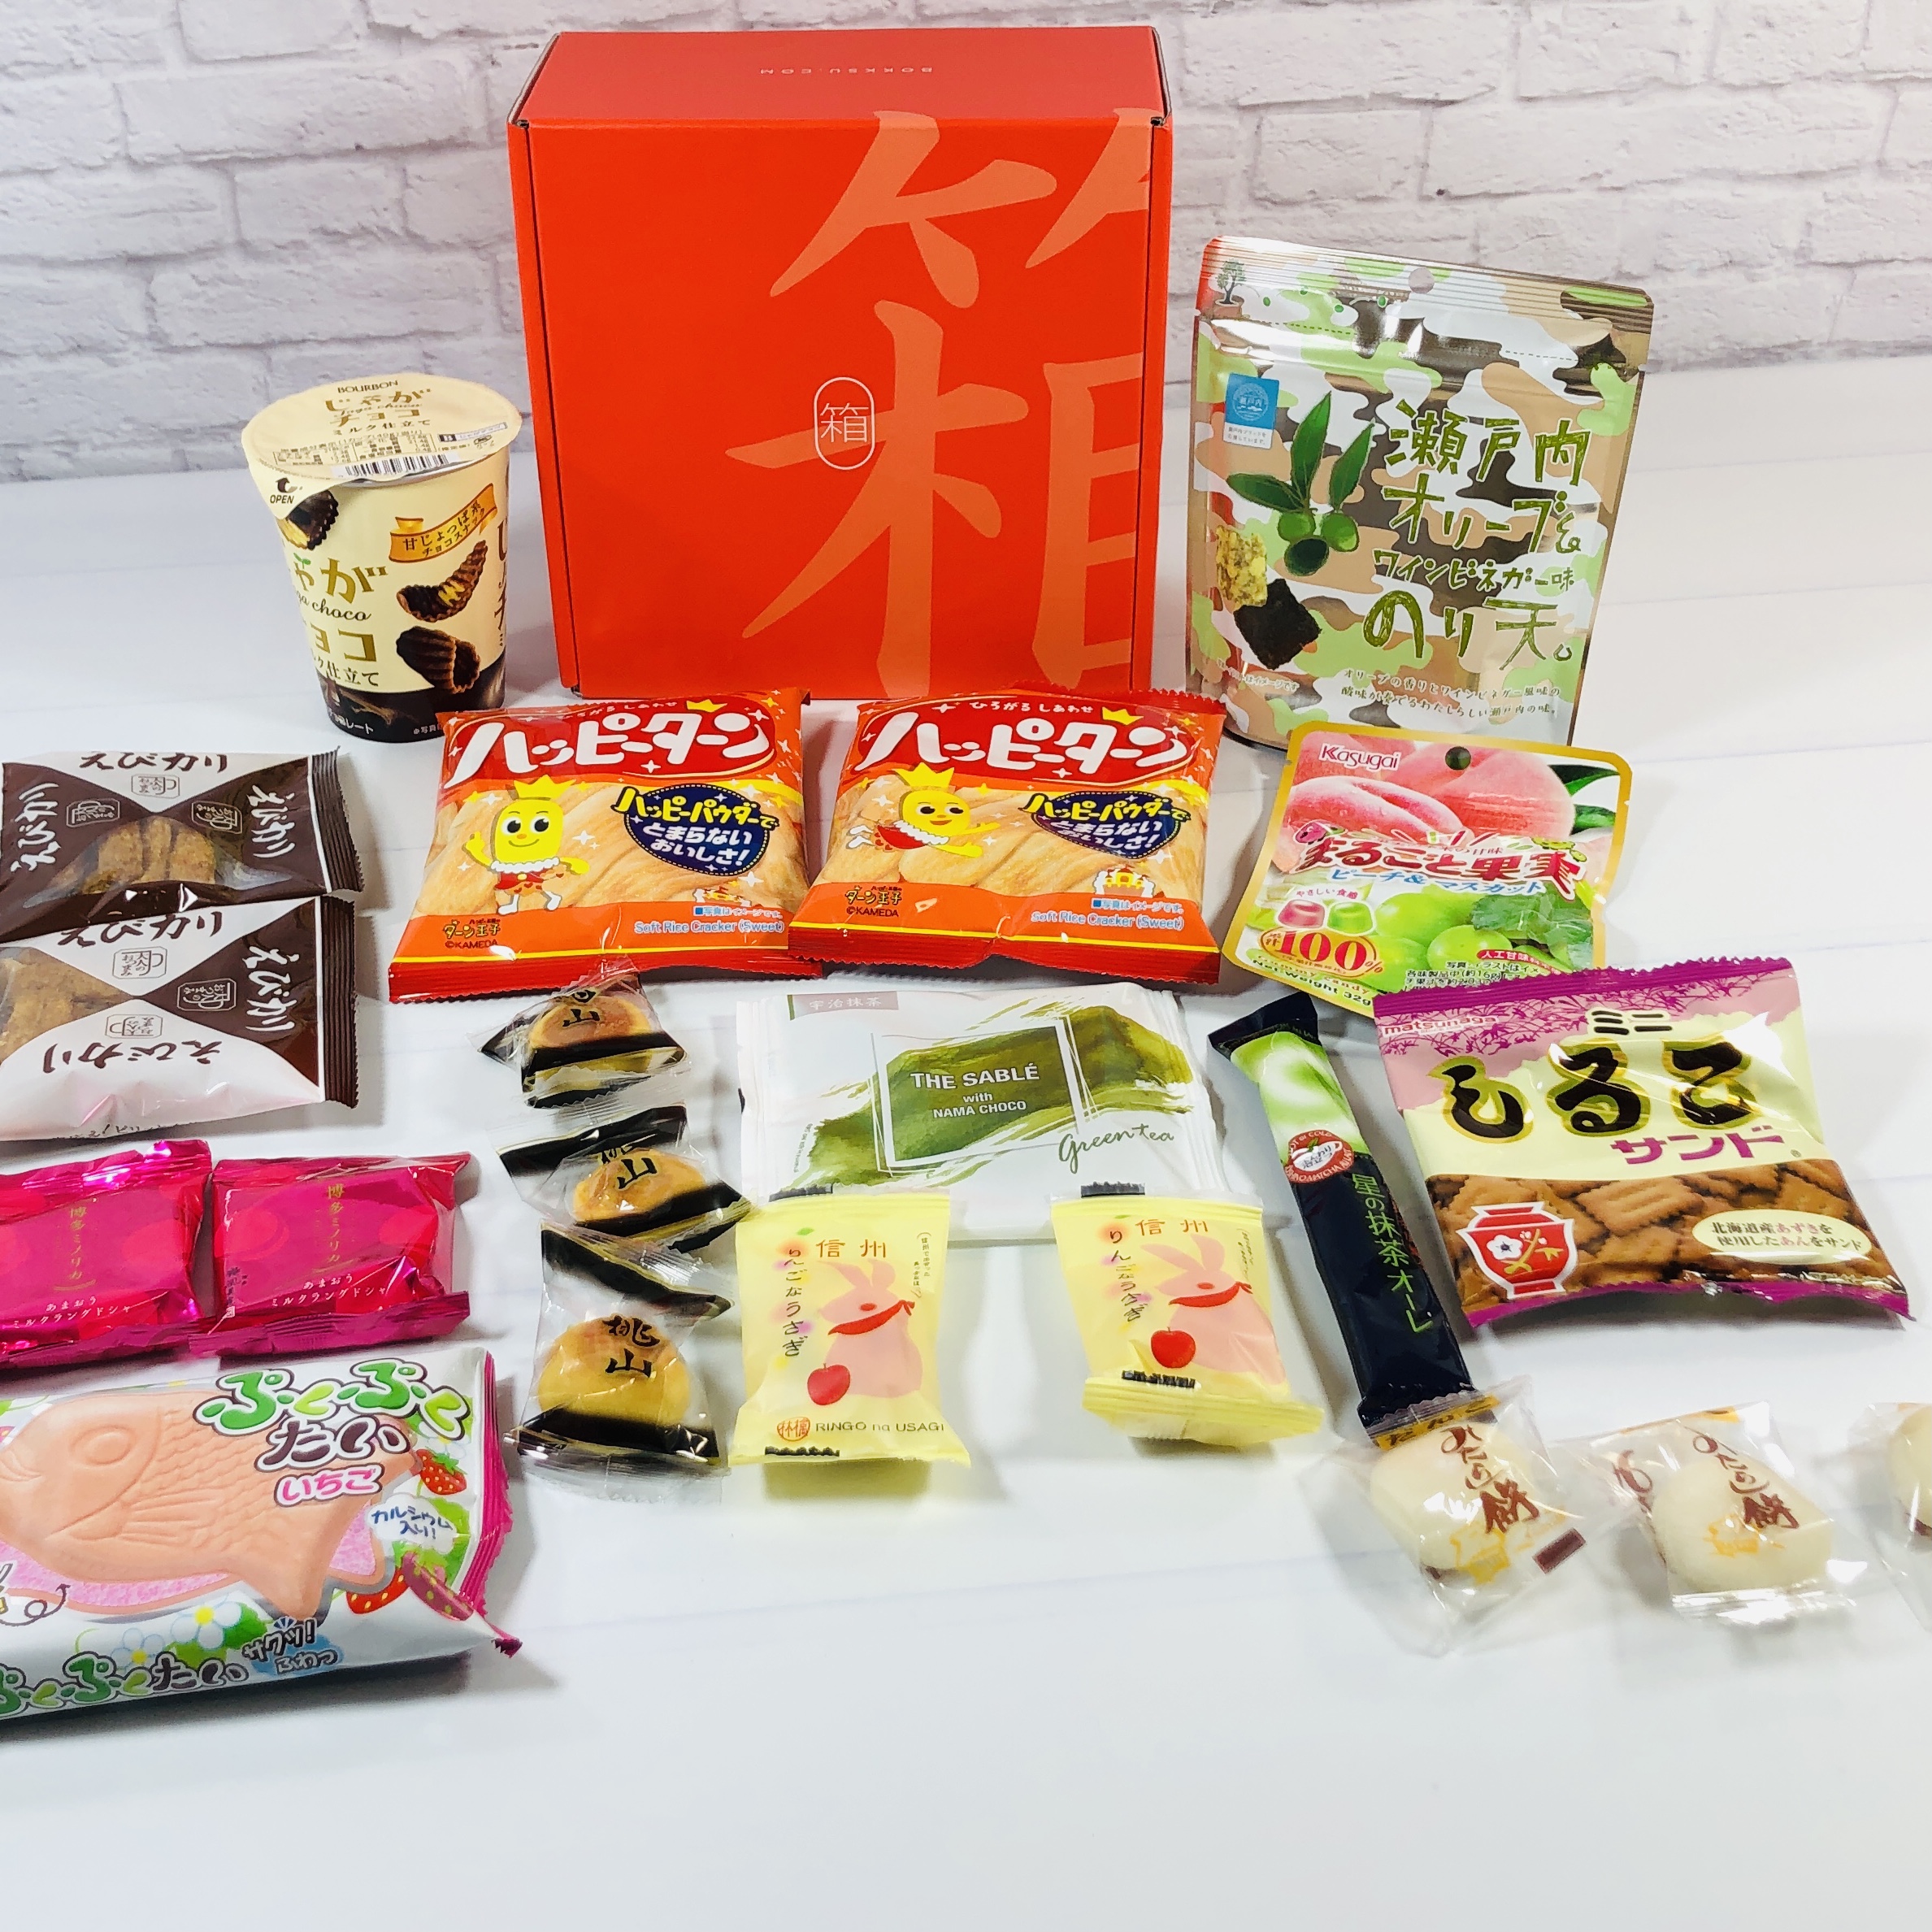 7 Sweet & Savory Japanese Snack Combos Anyone Will Love – Bokksu